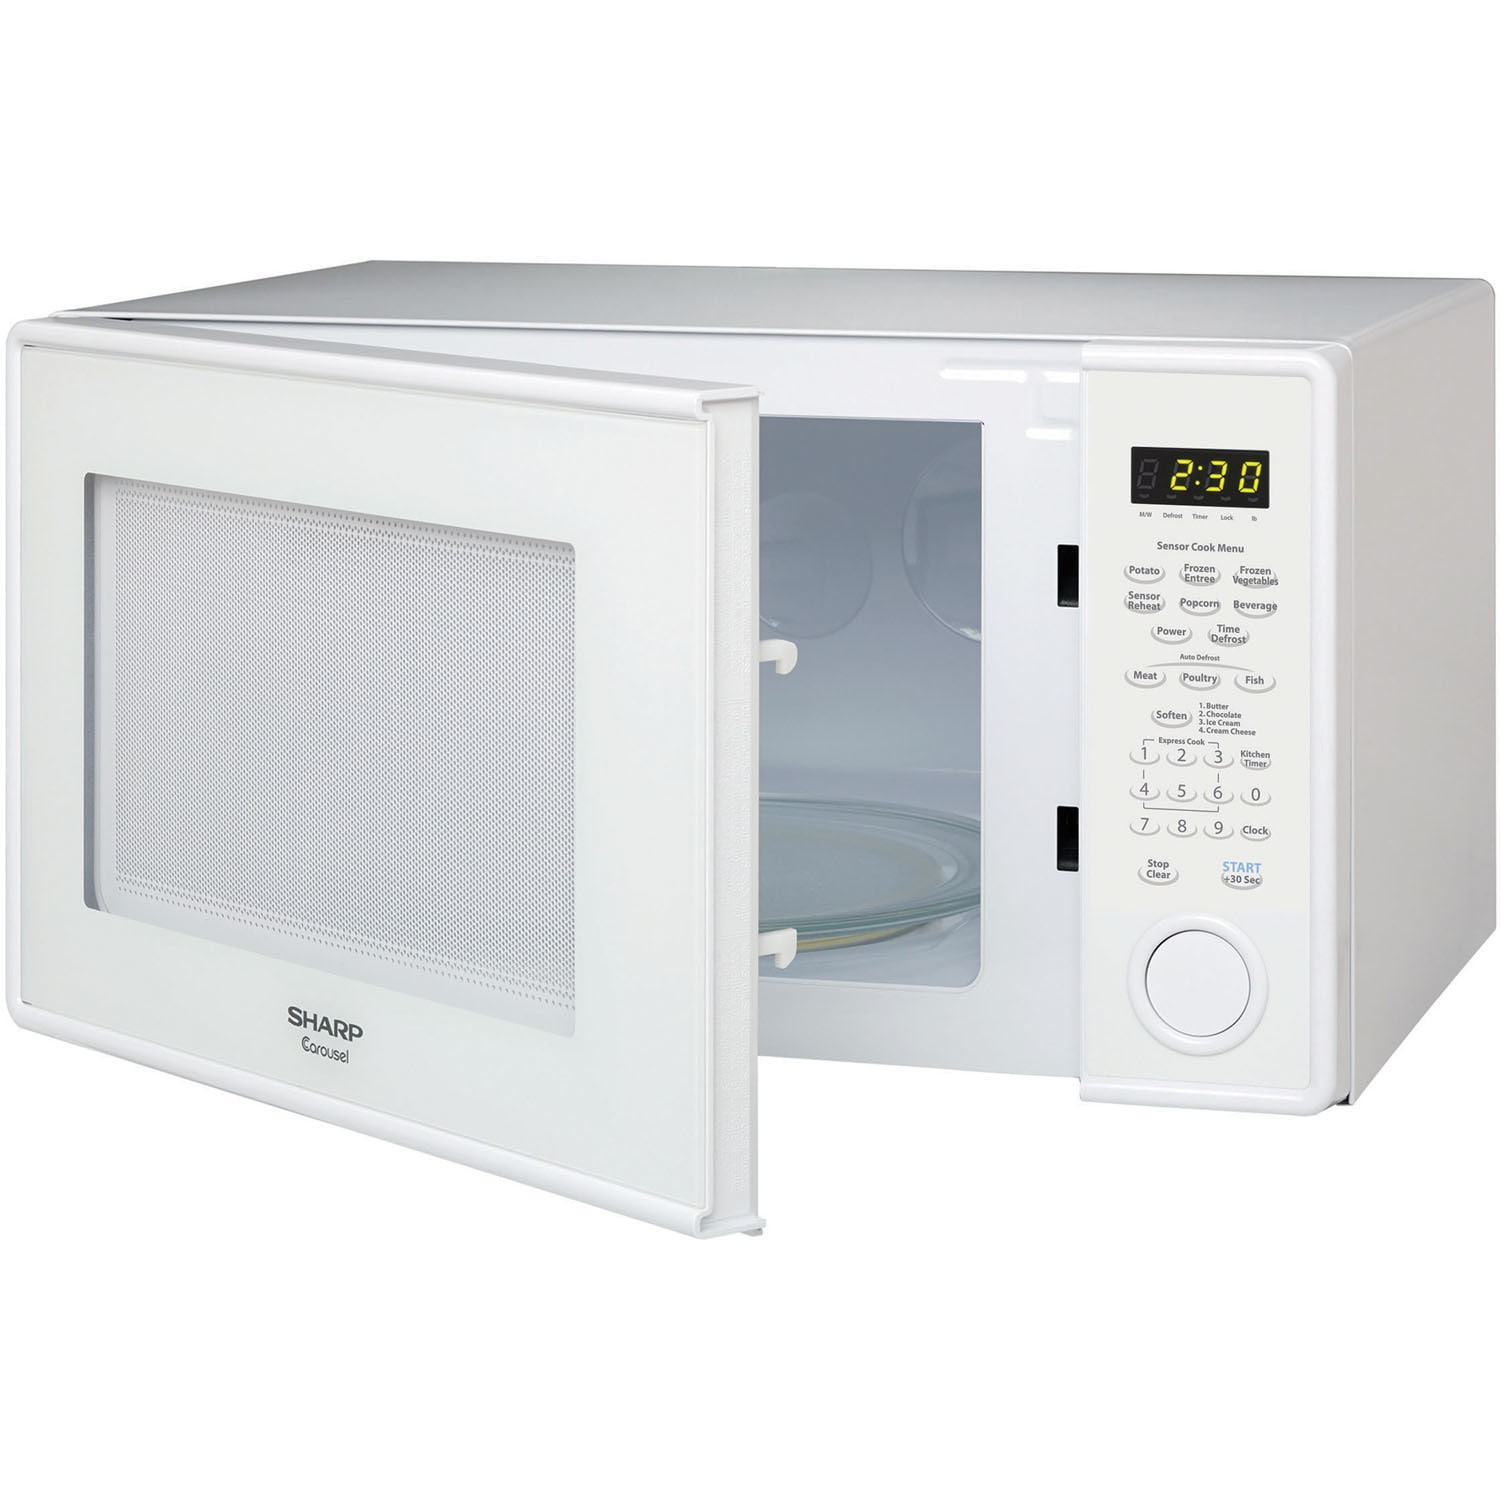 https://ak1.ostkcdn.com/images/products/12099503/Sharp-Carousel-1.3-Cu.-Ft.-1000W-Countertop-Microwave-Oven-White-4761b3a4-3bc8-4173-b3db-5422cd517c22.jpg